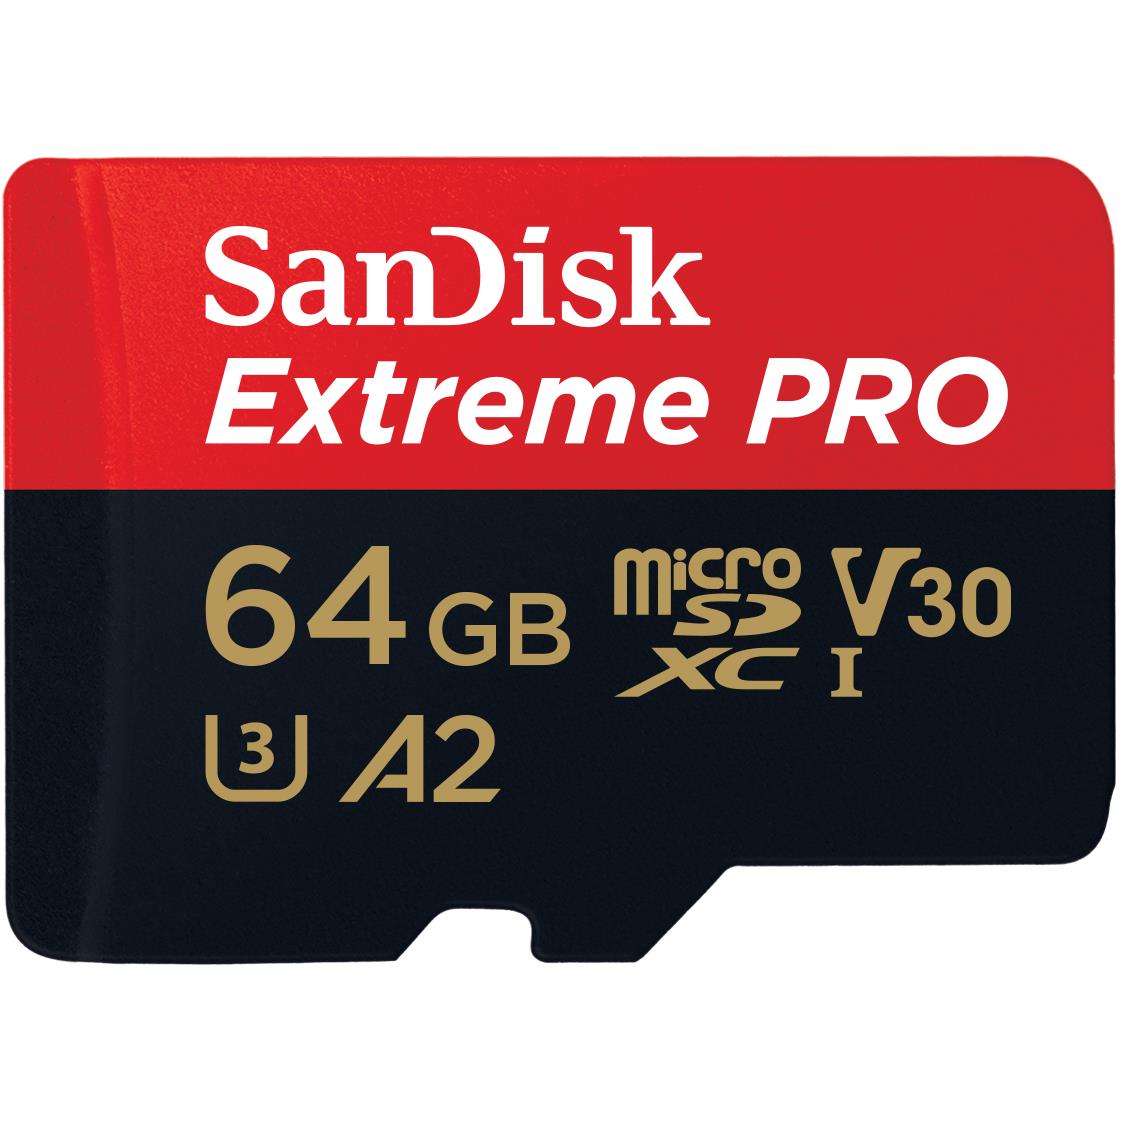 sandisk extreme pro microsdxc 64gb 200mb/s memory card [2022]